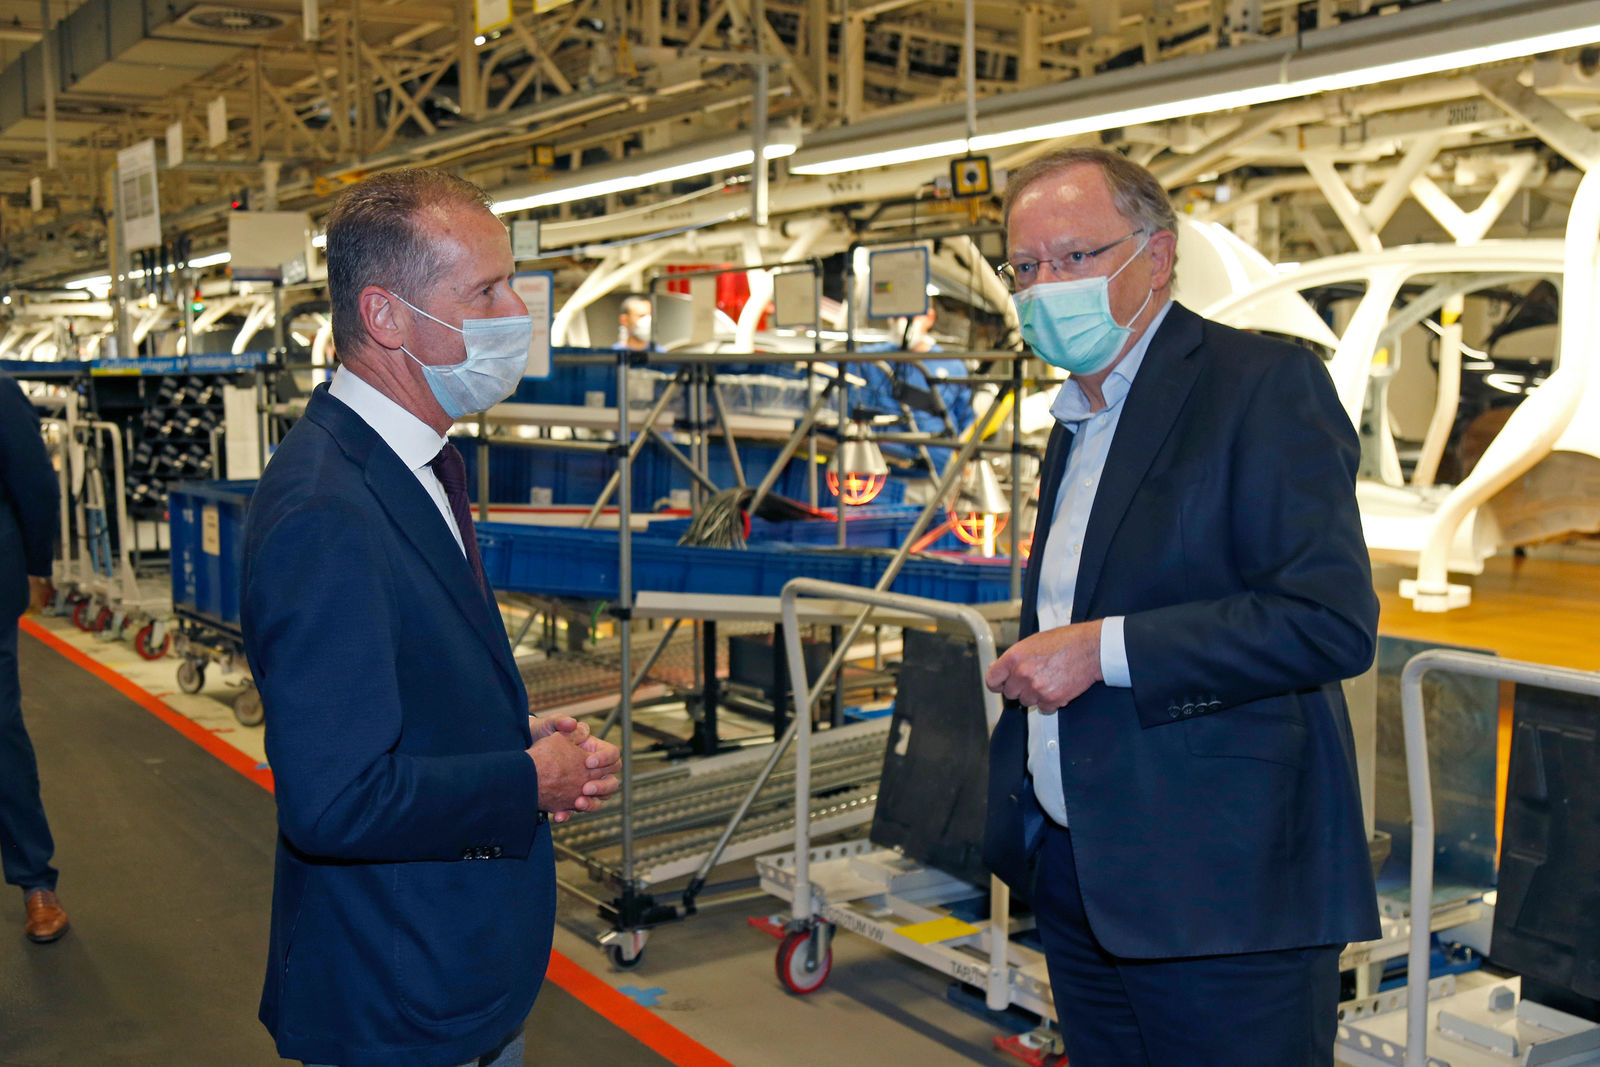 Production at Volkswagen in Wolfsburg begins again